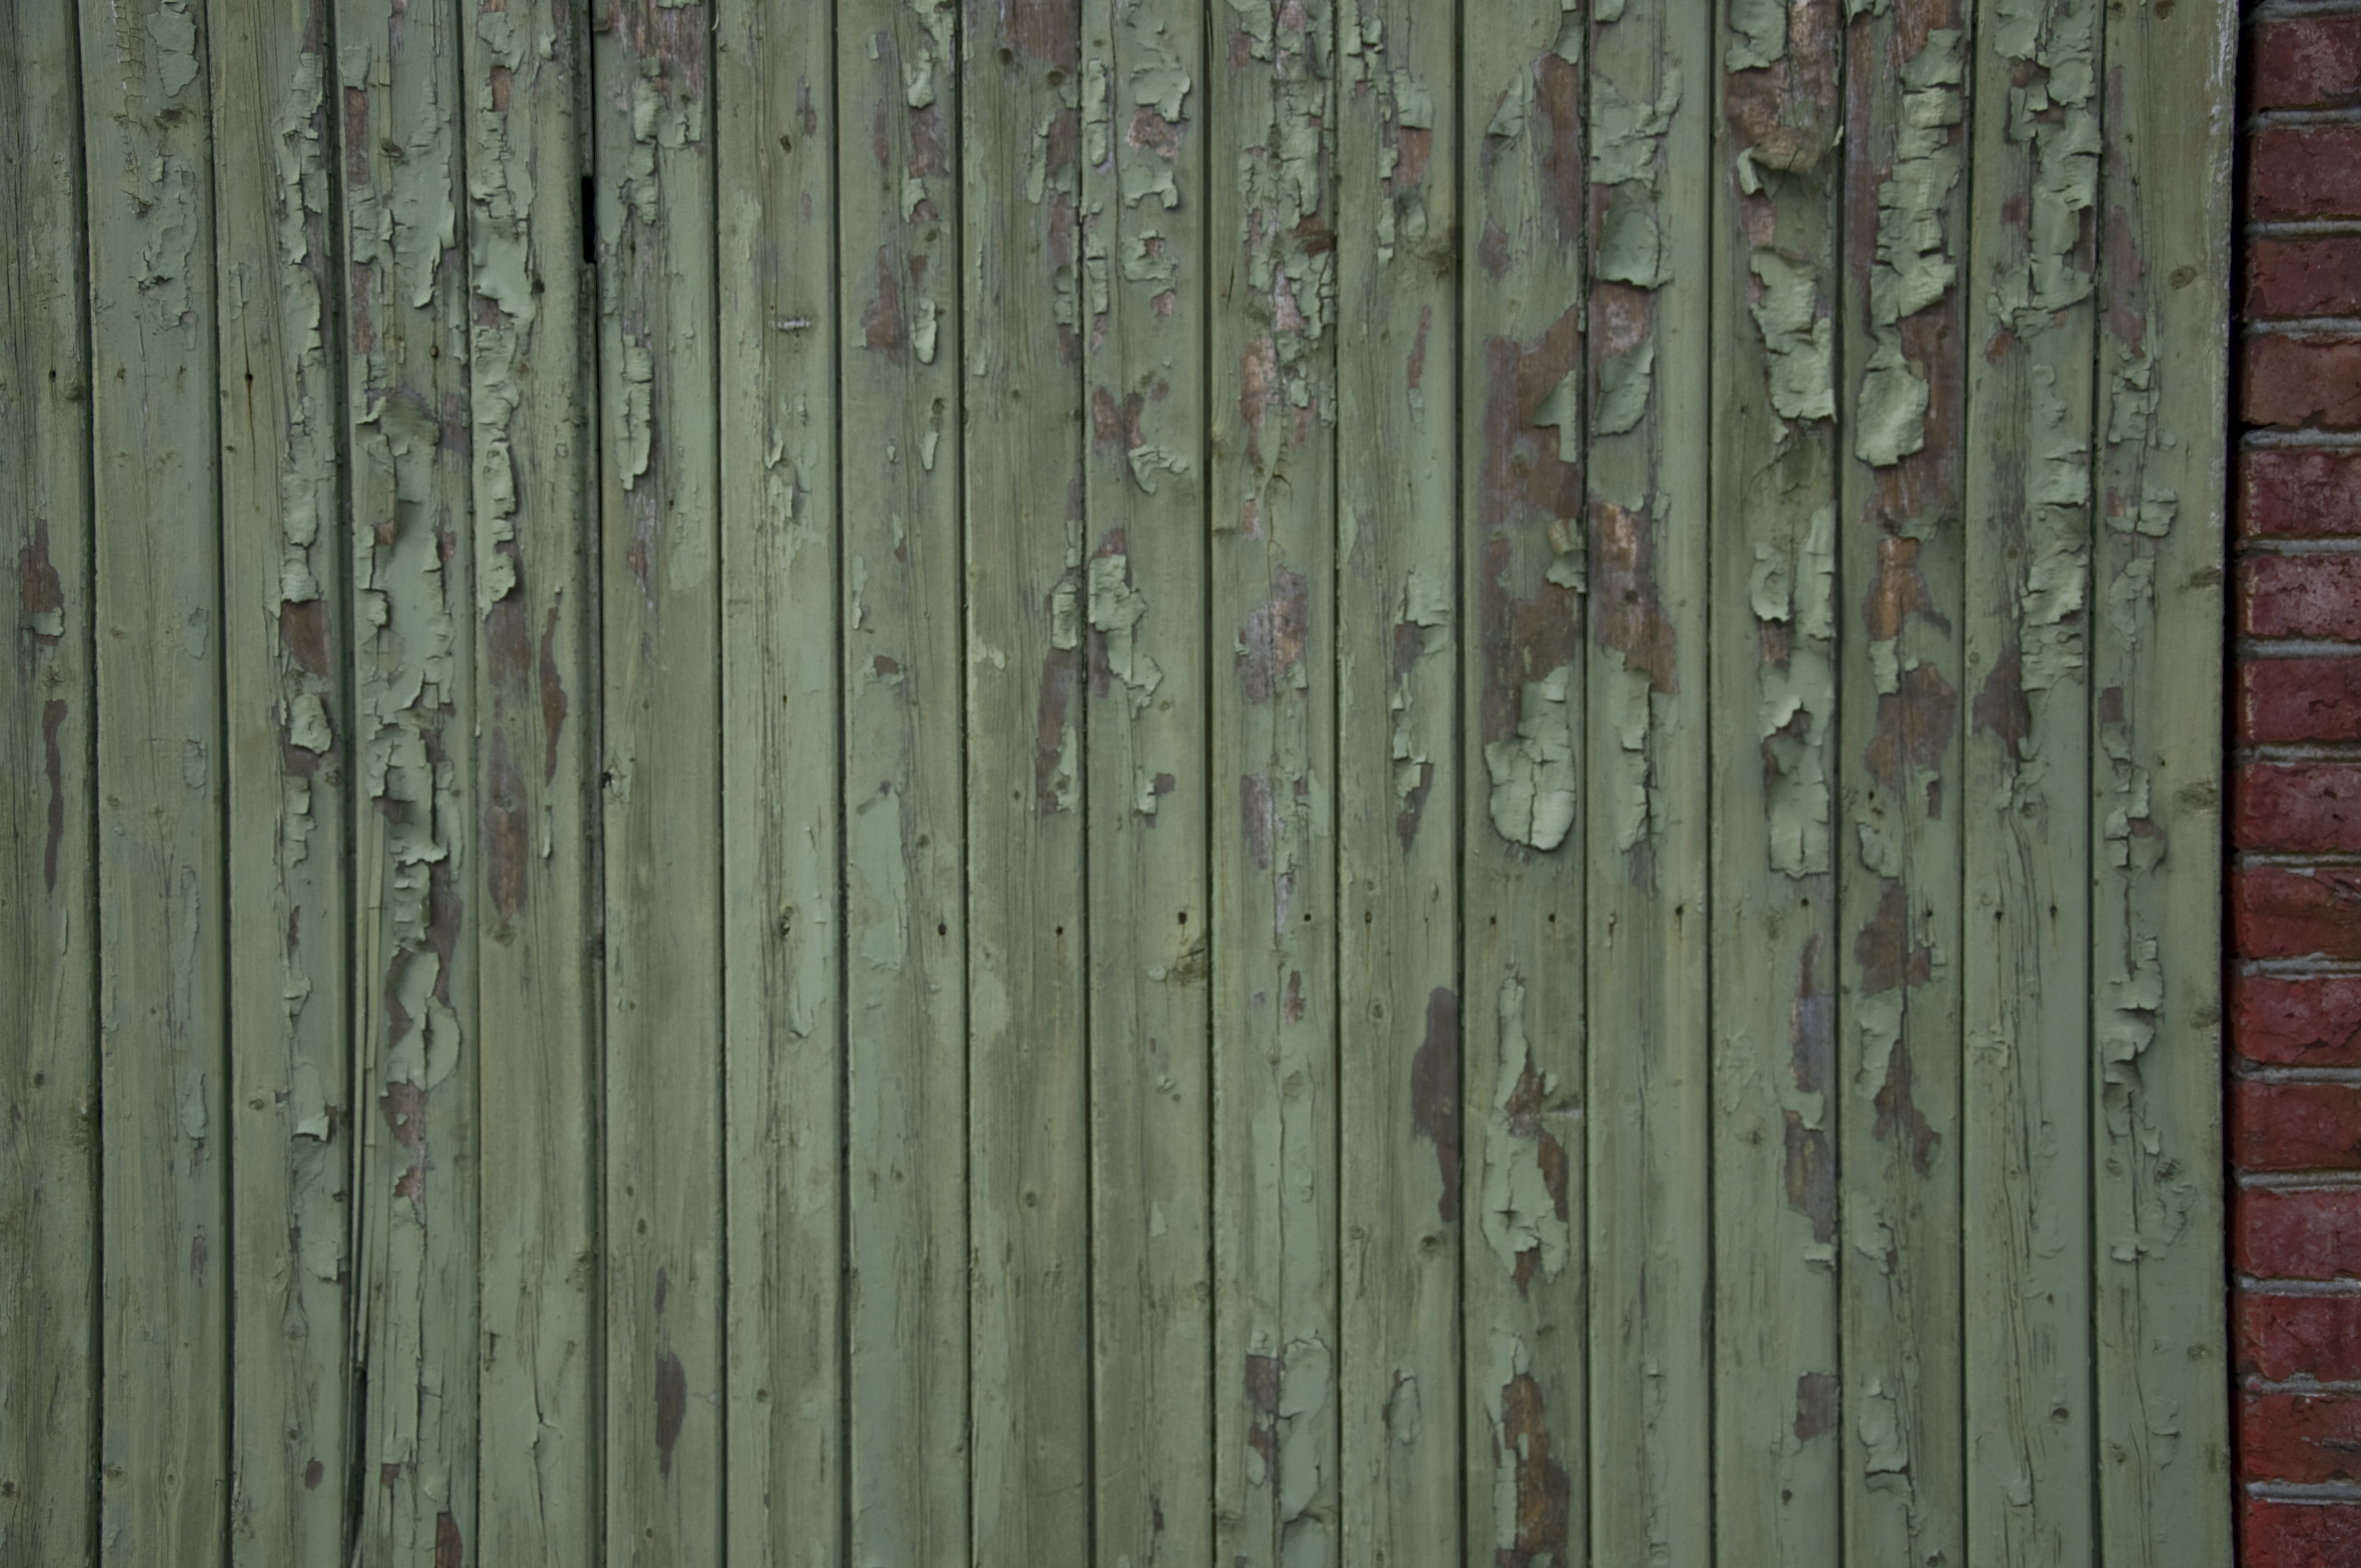 Green Peeling Paint On Door | photo page - everystockphoto